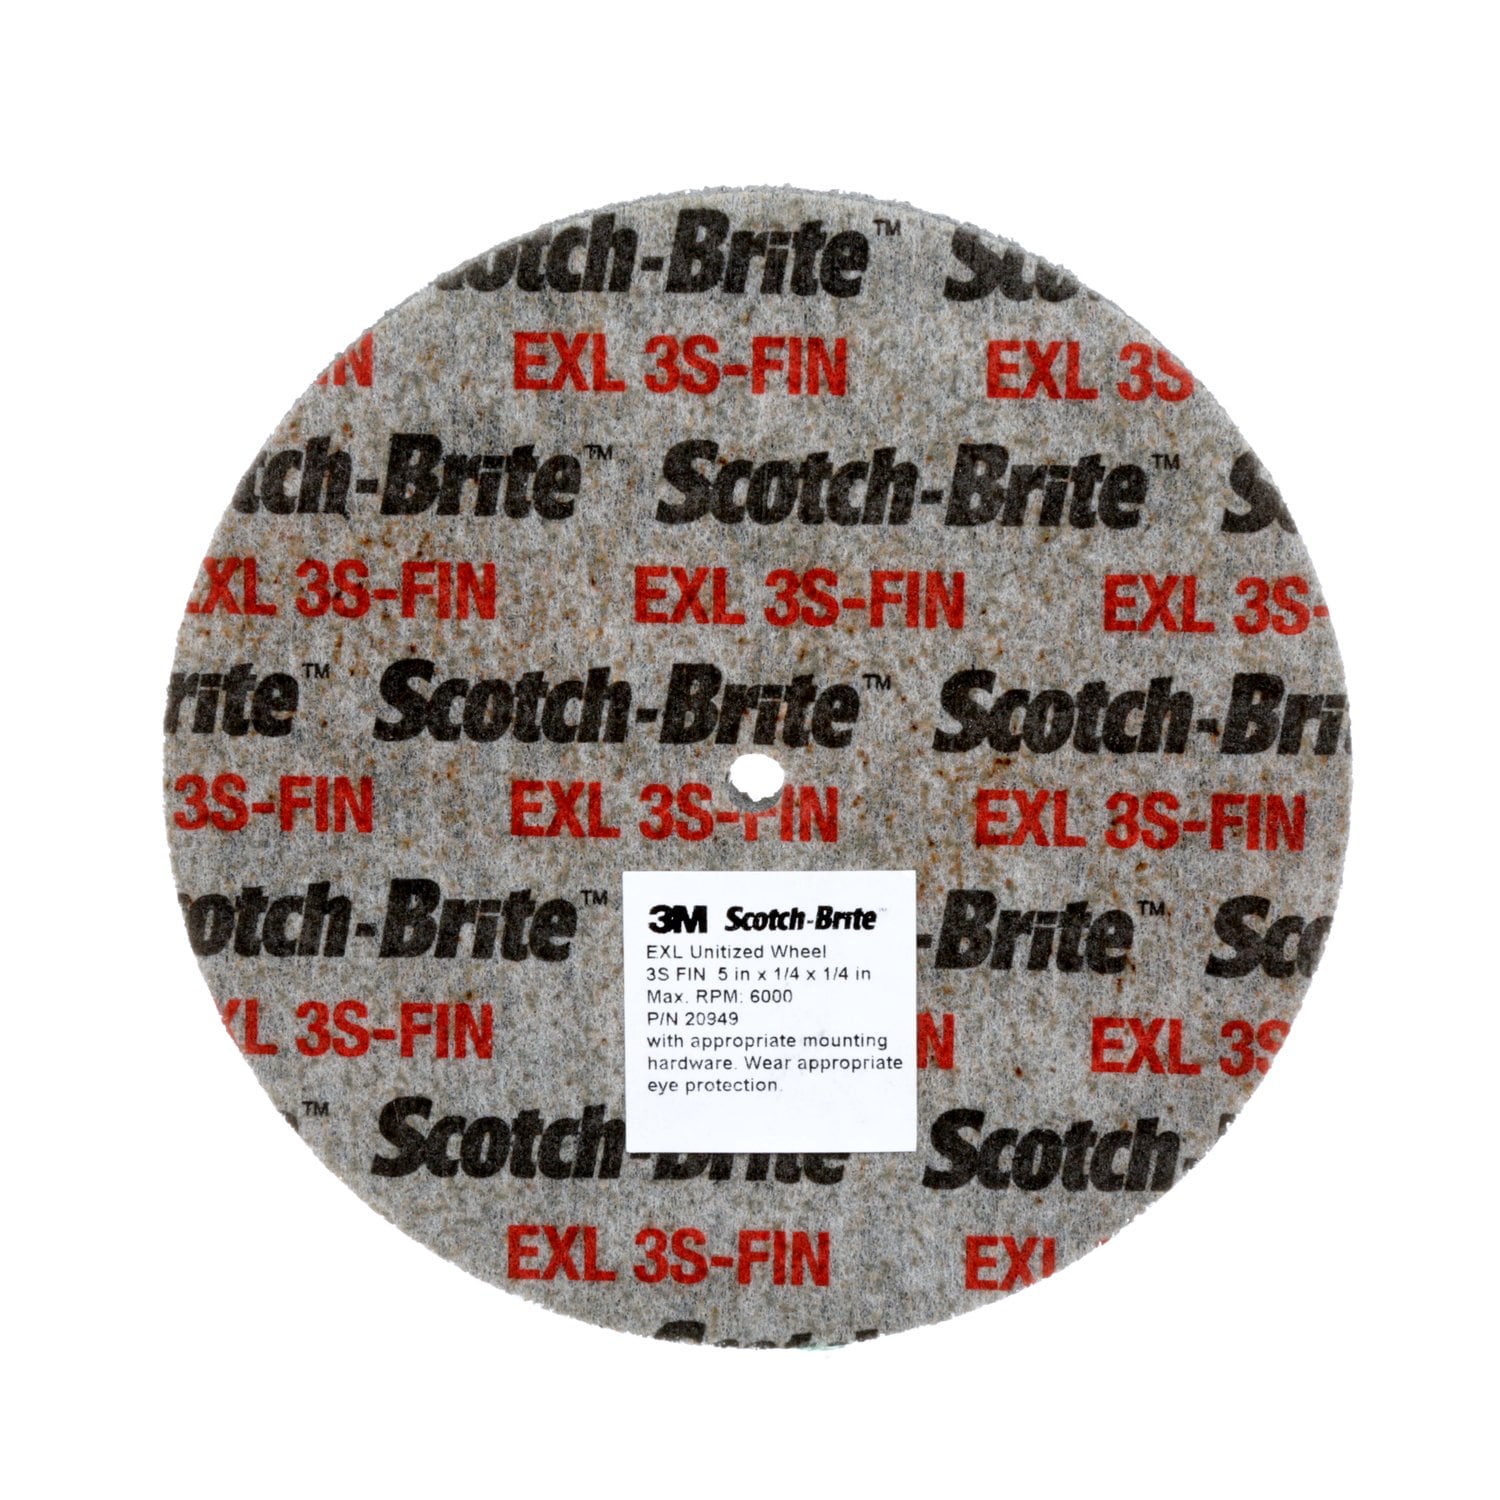 7010329028 - Scotch-Brite SST Unitized Wheel, 6 in x 1/4 in x 1/2 in 5S FIN, 8
ea/Case